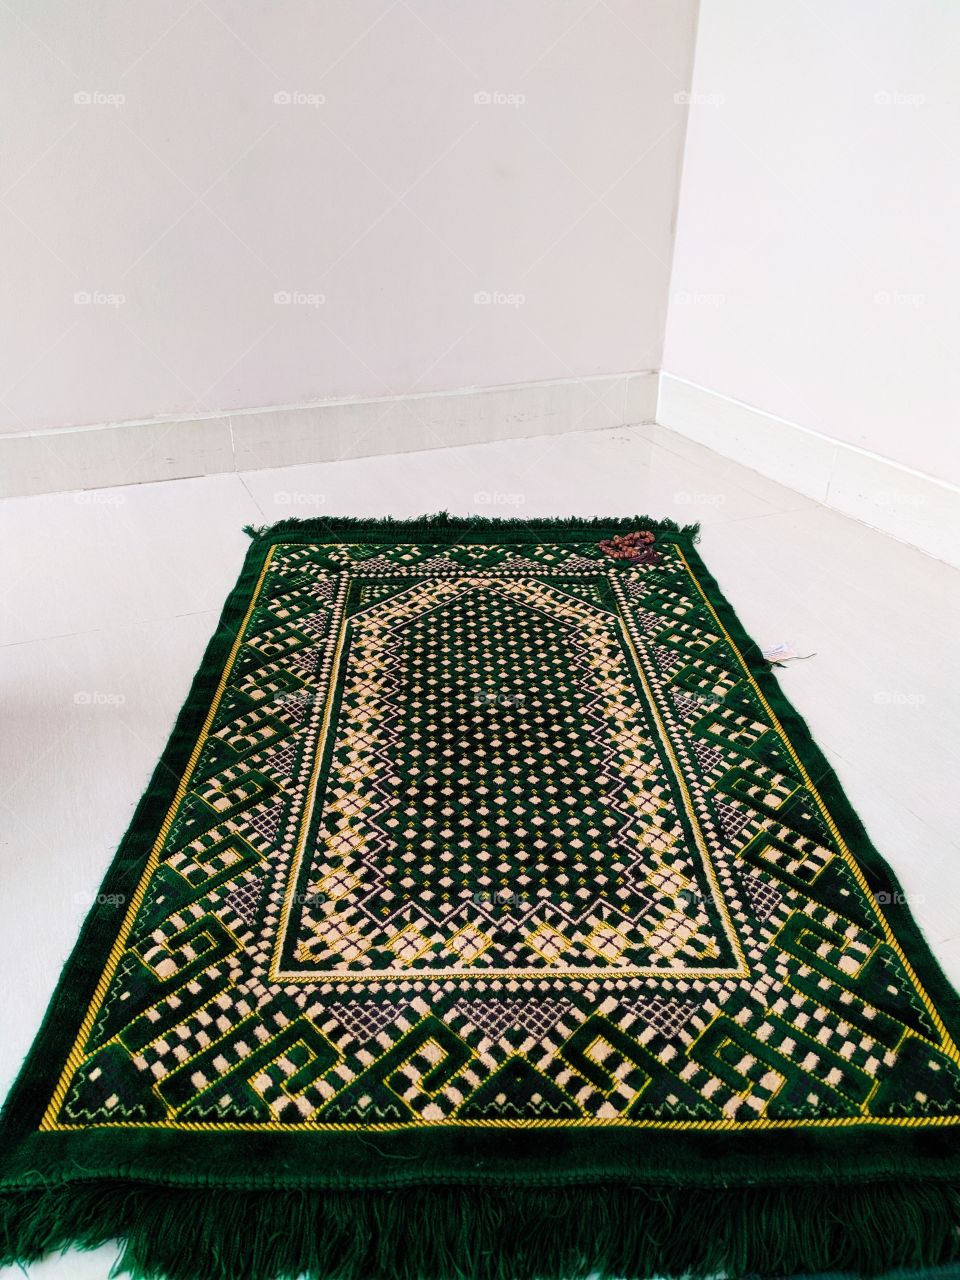 moslem pray in the mosqoe